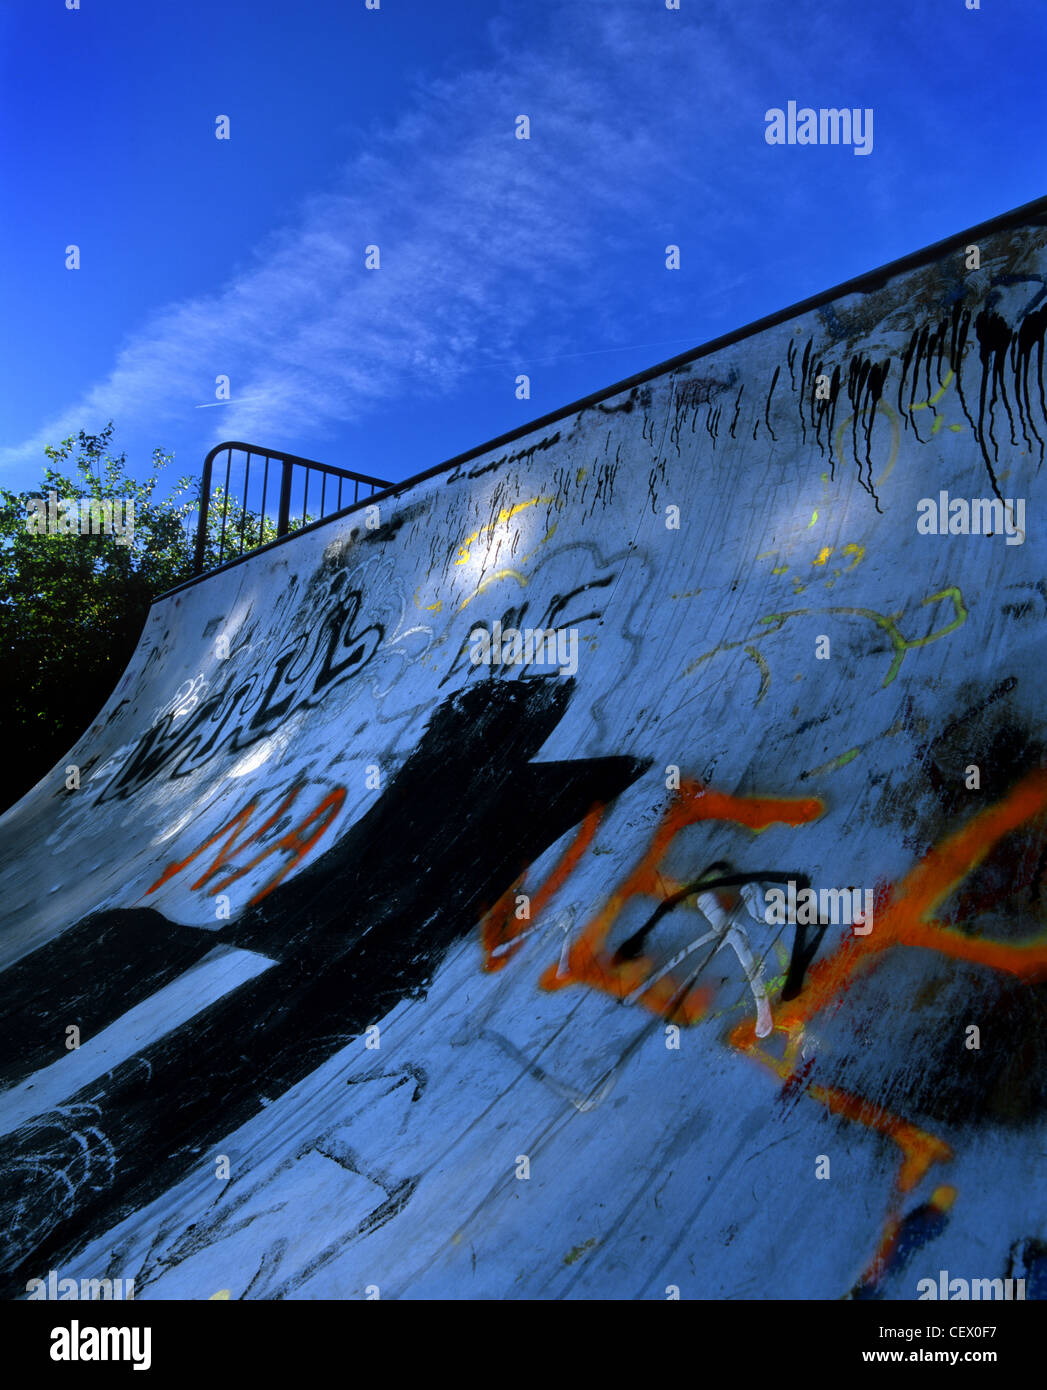 A skateboard ramp covered in graffiti. Stock Photo